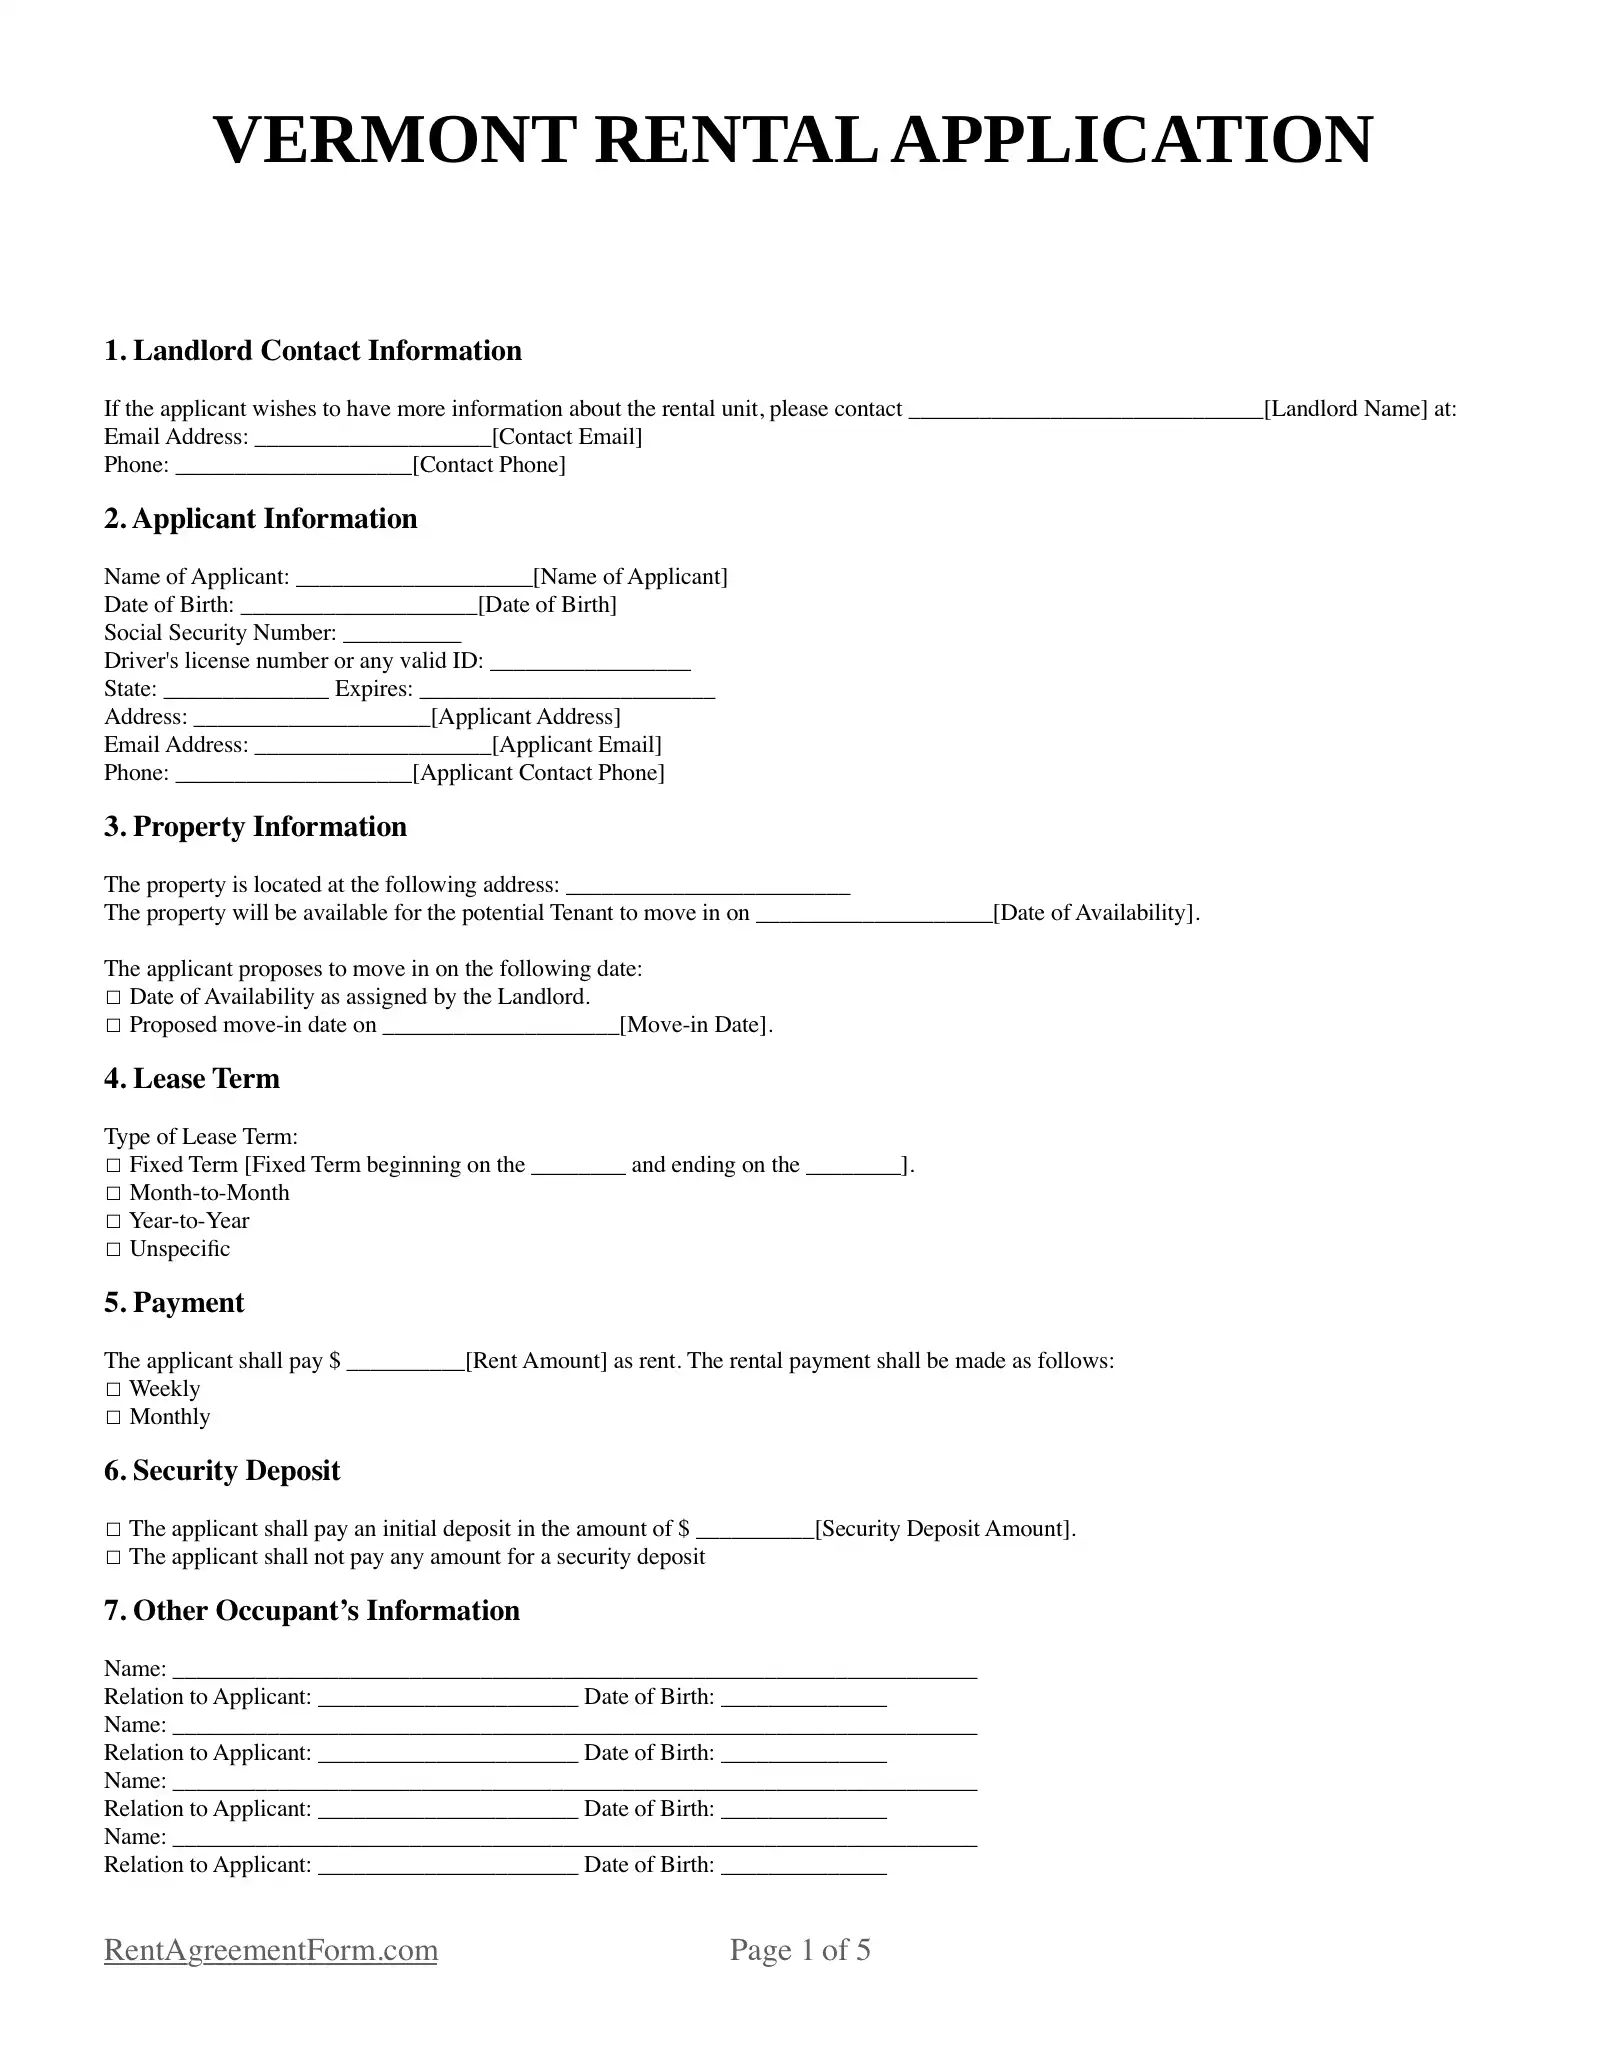 Vermont Rental Application Sample